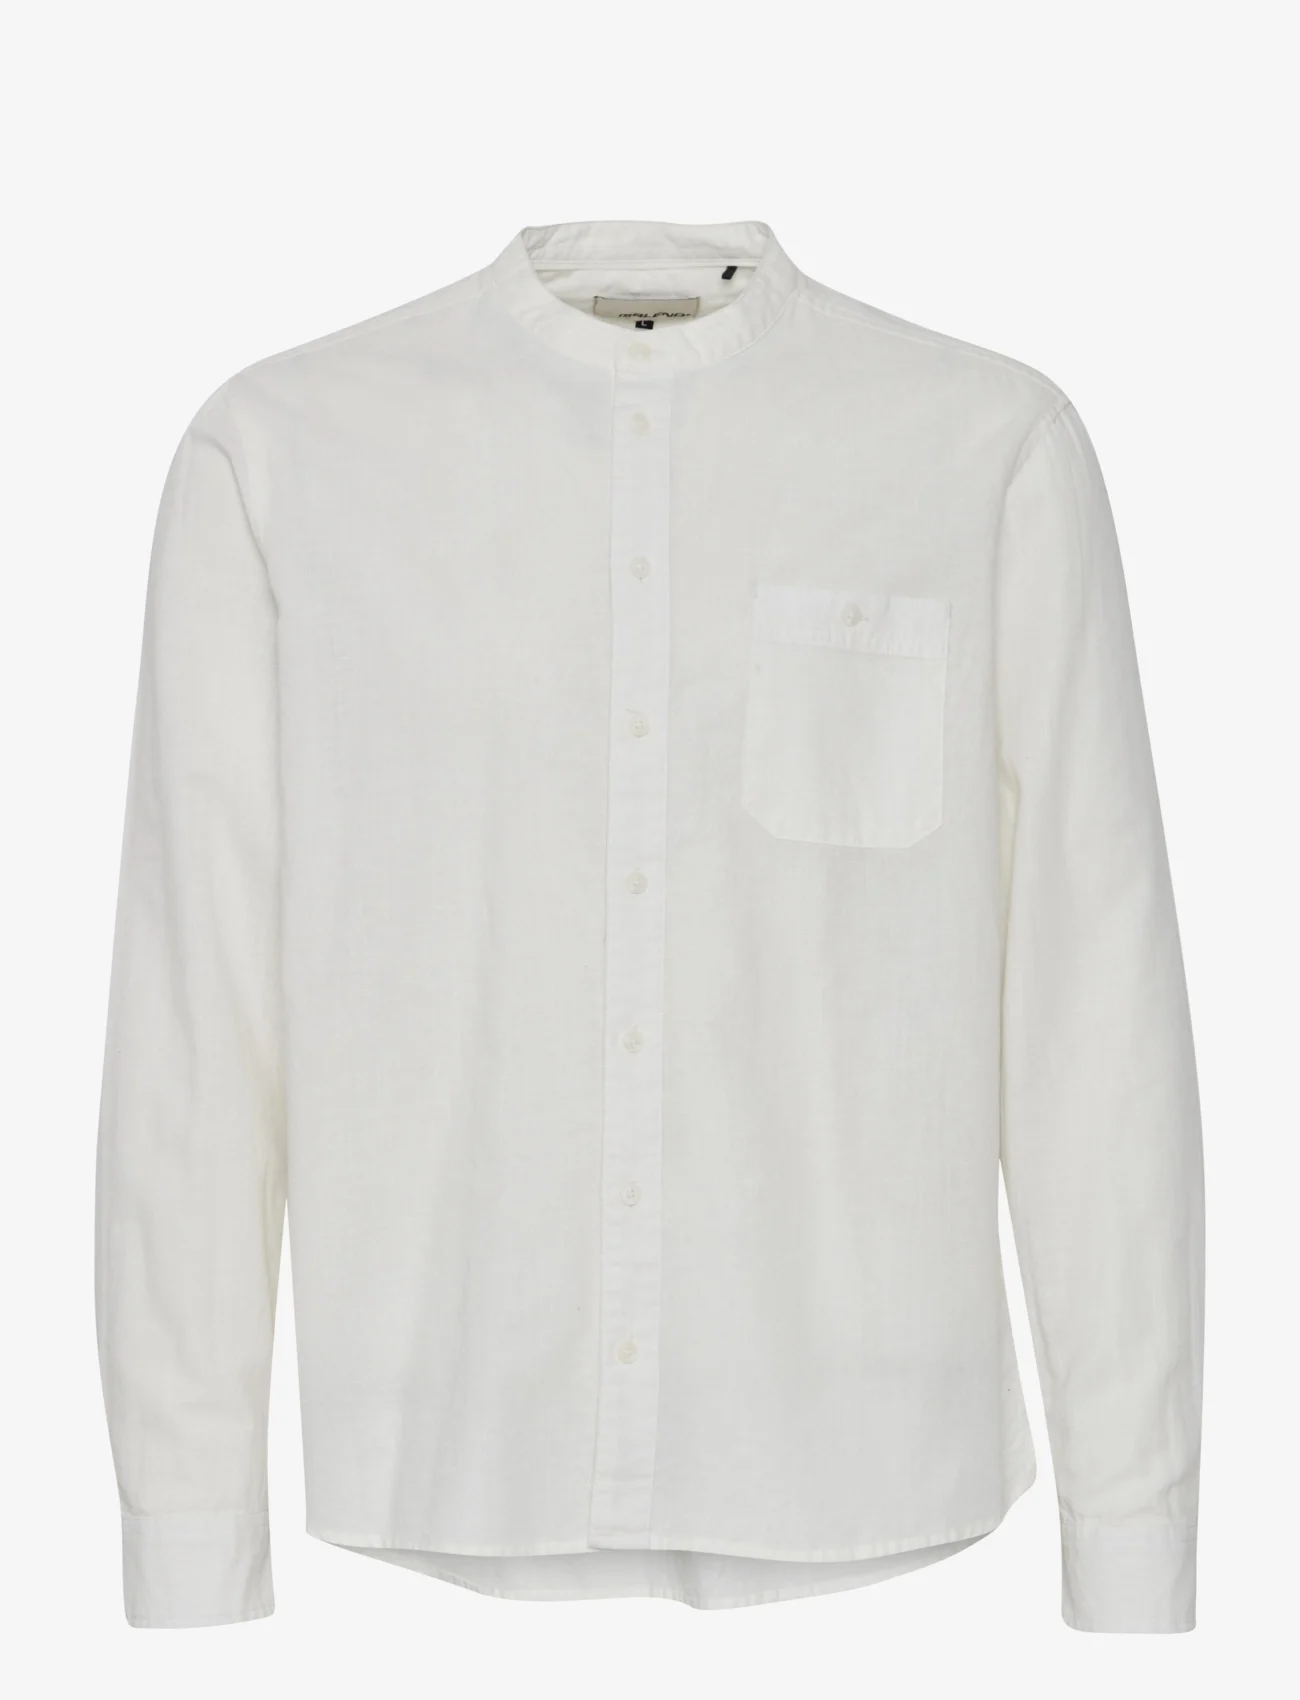 Blend - Shirt - casual shirts - snow white - 0